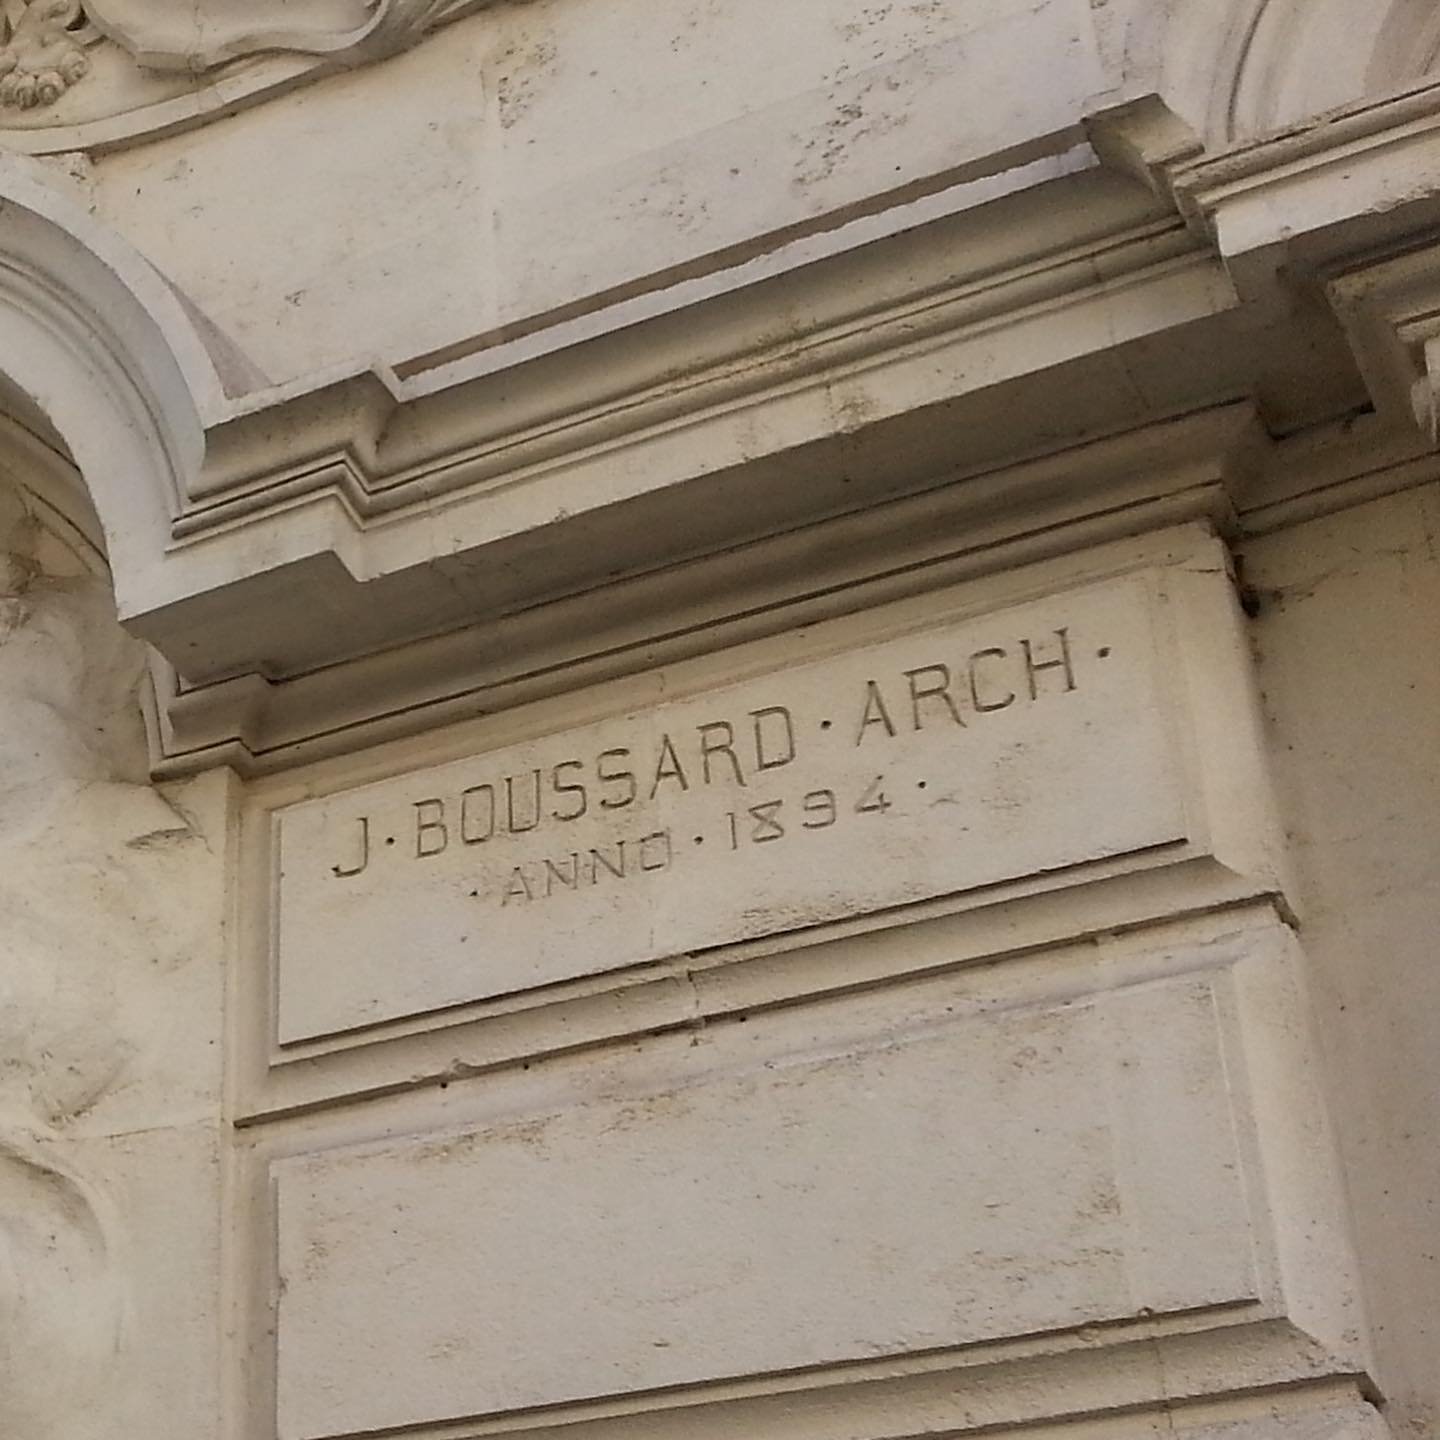 Jean-Marie-Boussard-Paris.jpg